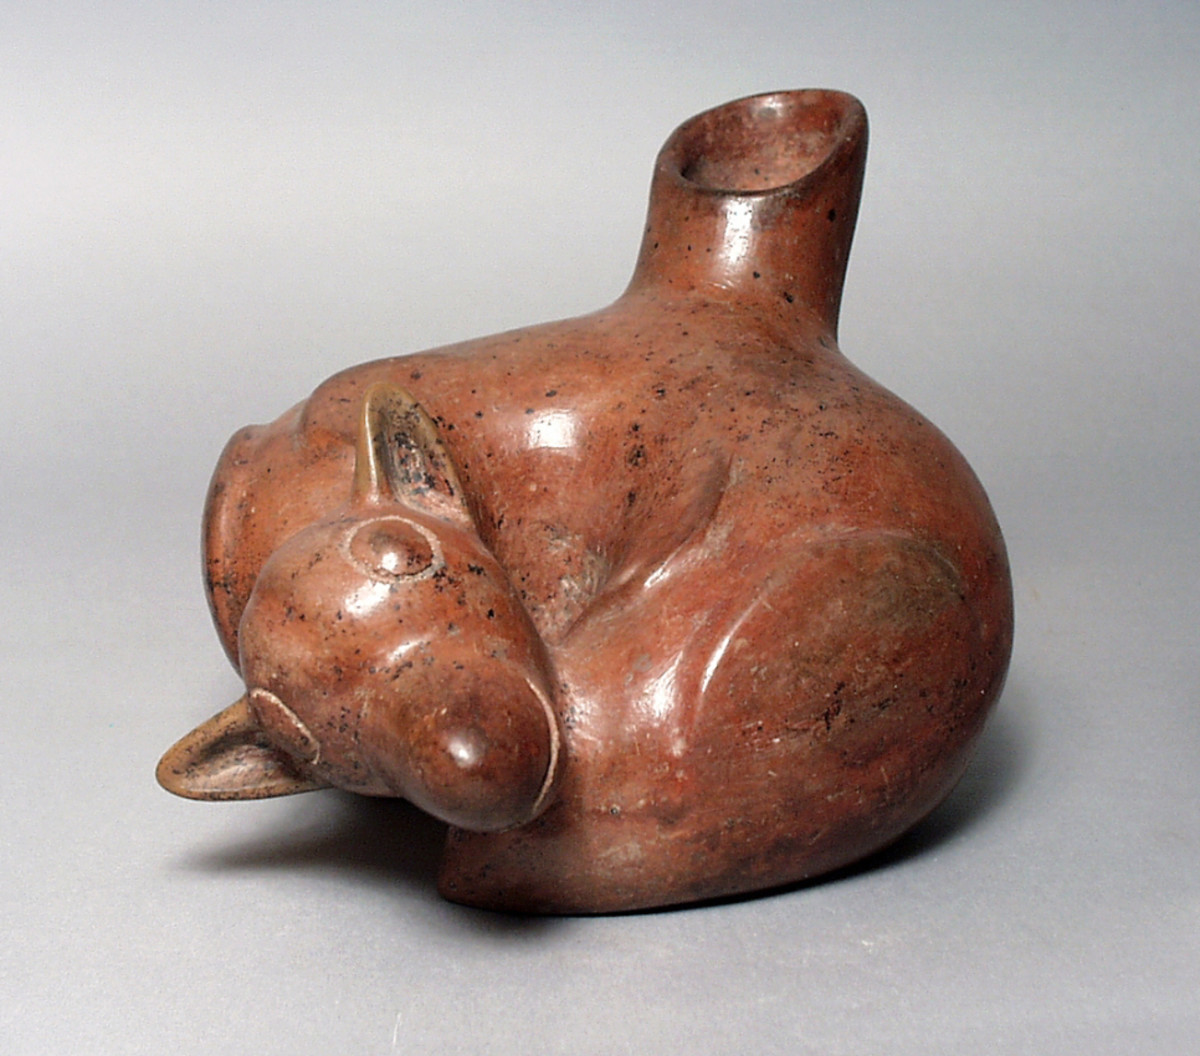 Native American curled dog vessel, c. 200 BC–500 AD